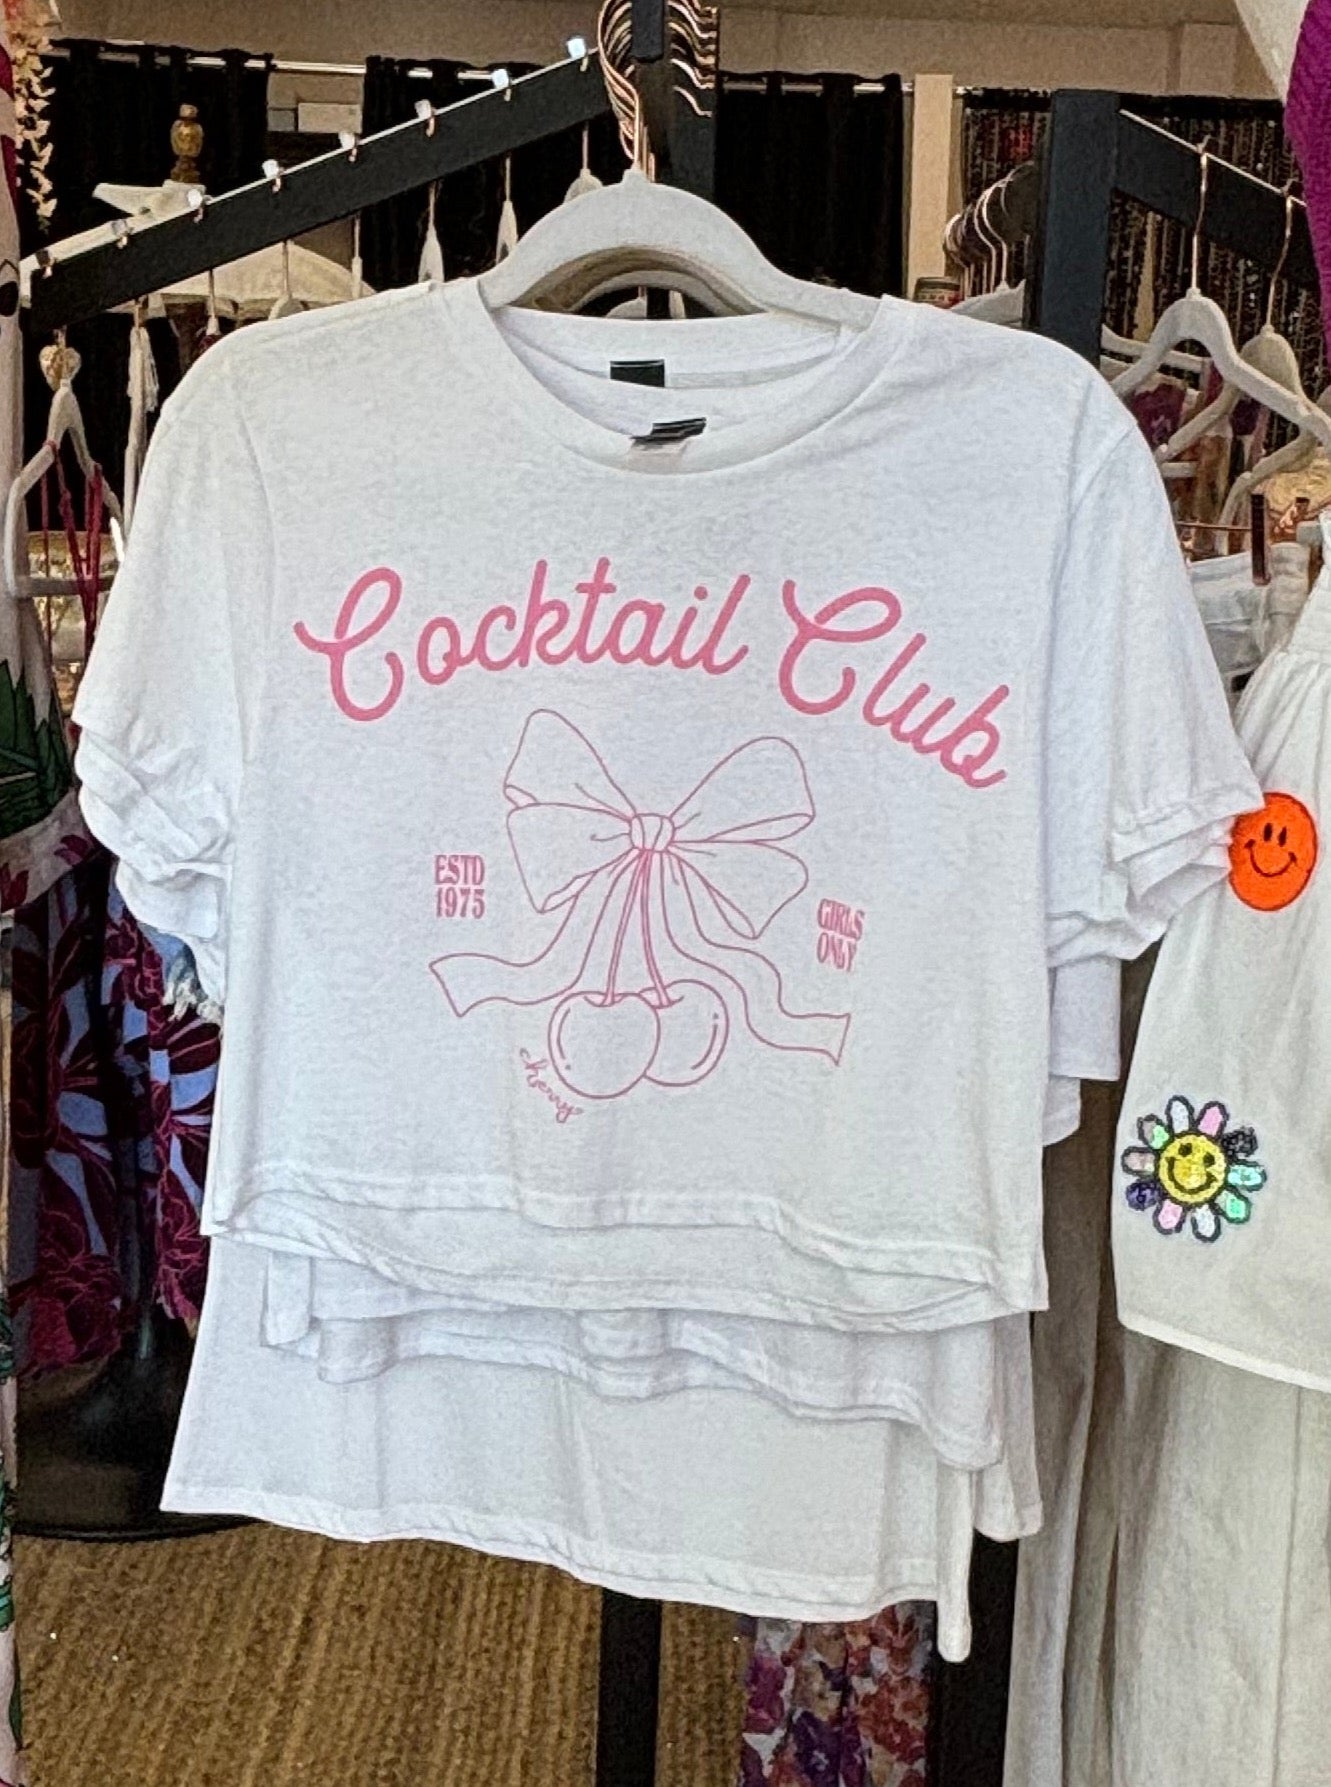 Charlotte Cocktail Club tee